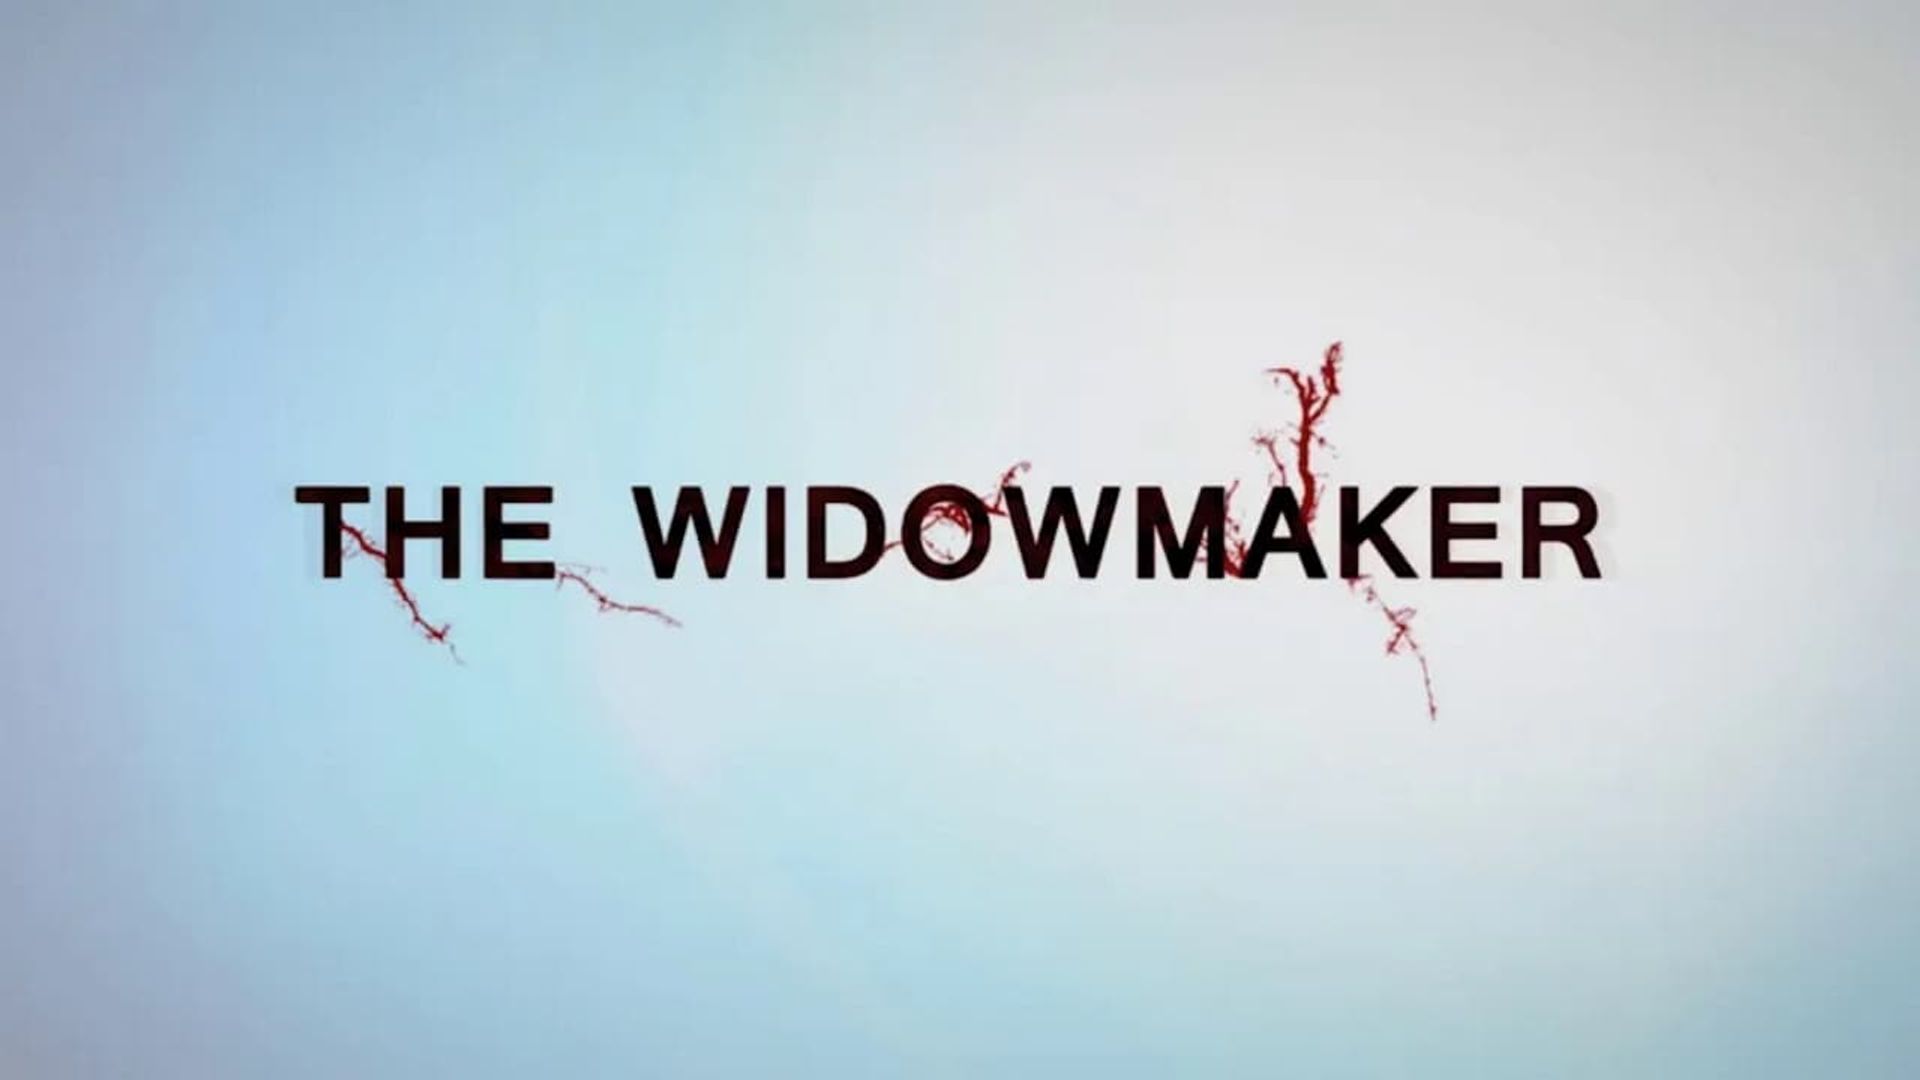 The Widowmaker background